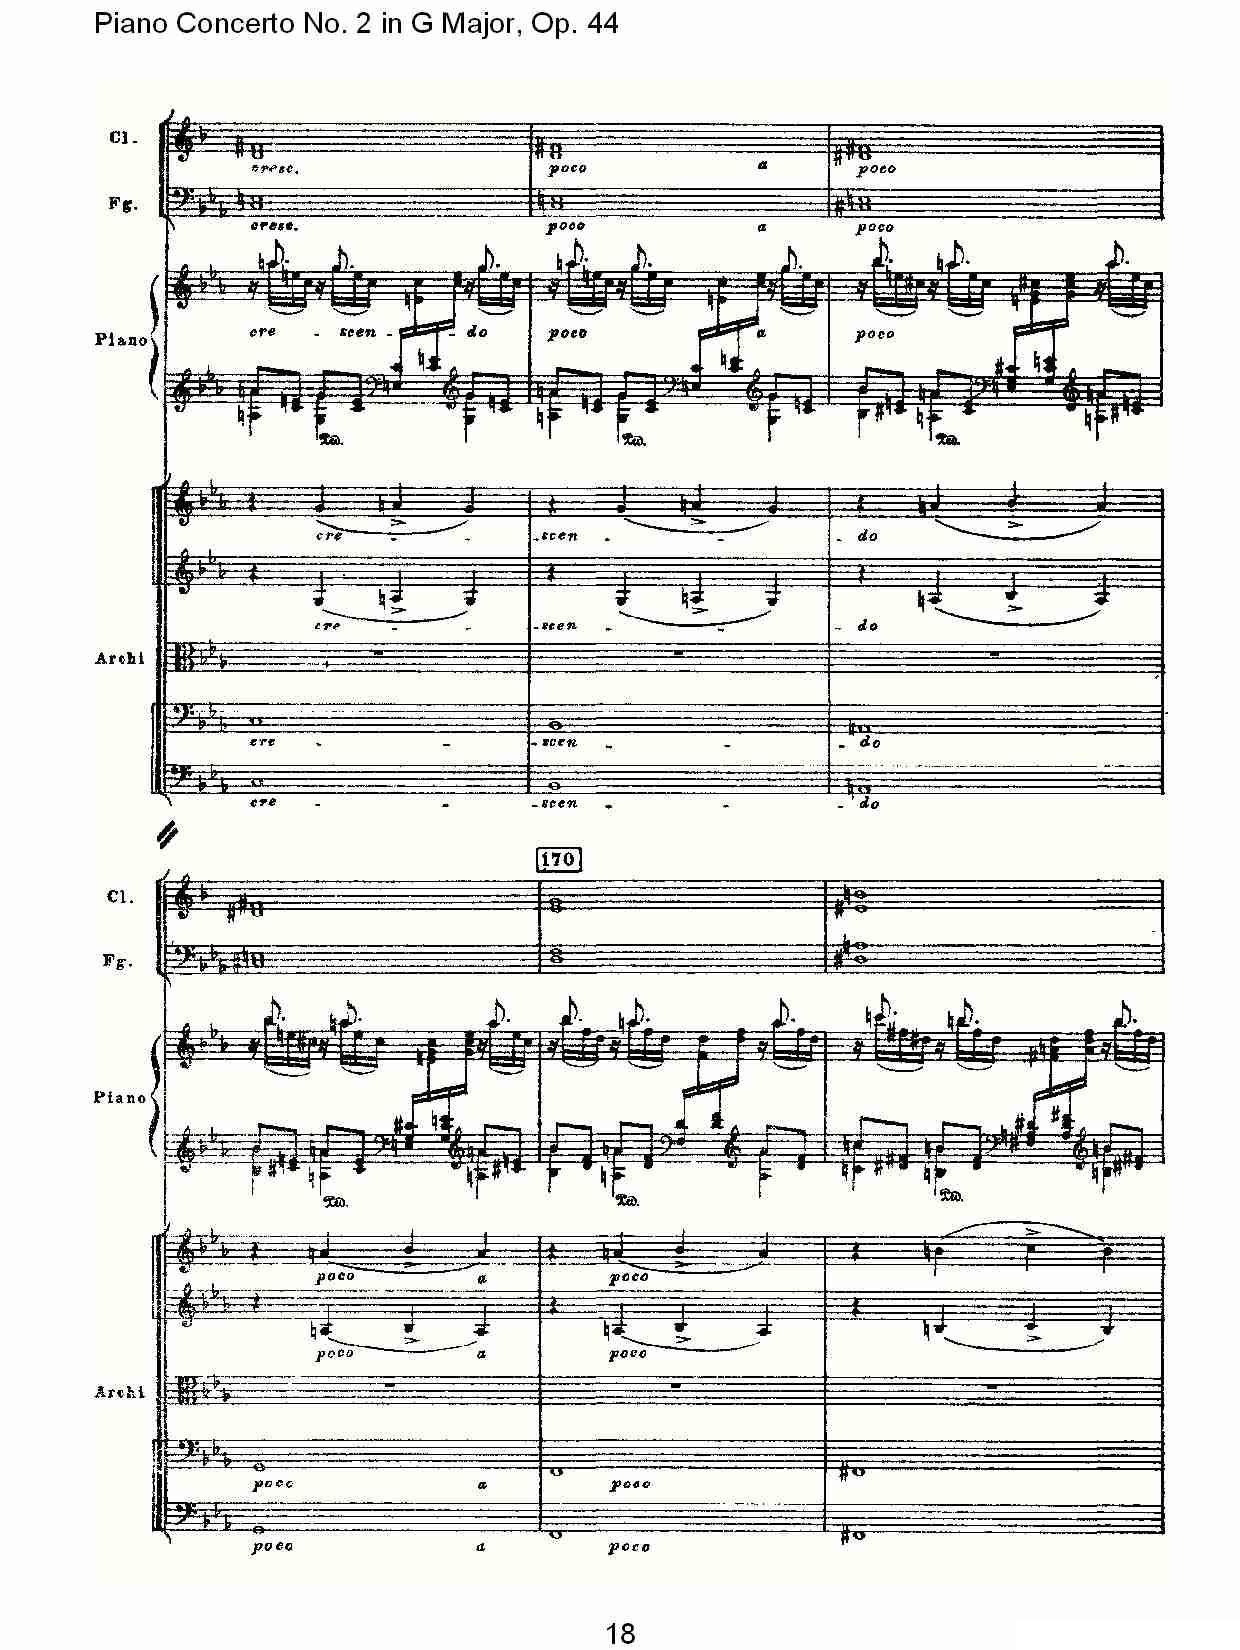 G大调第二钢琴协奏曲, Op.44第一乐章（一）钢琴曲谱（图18）